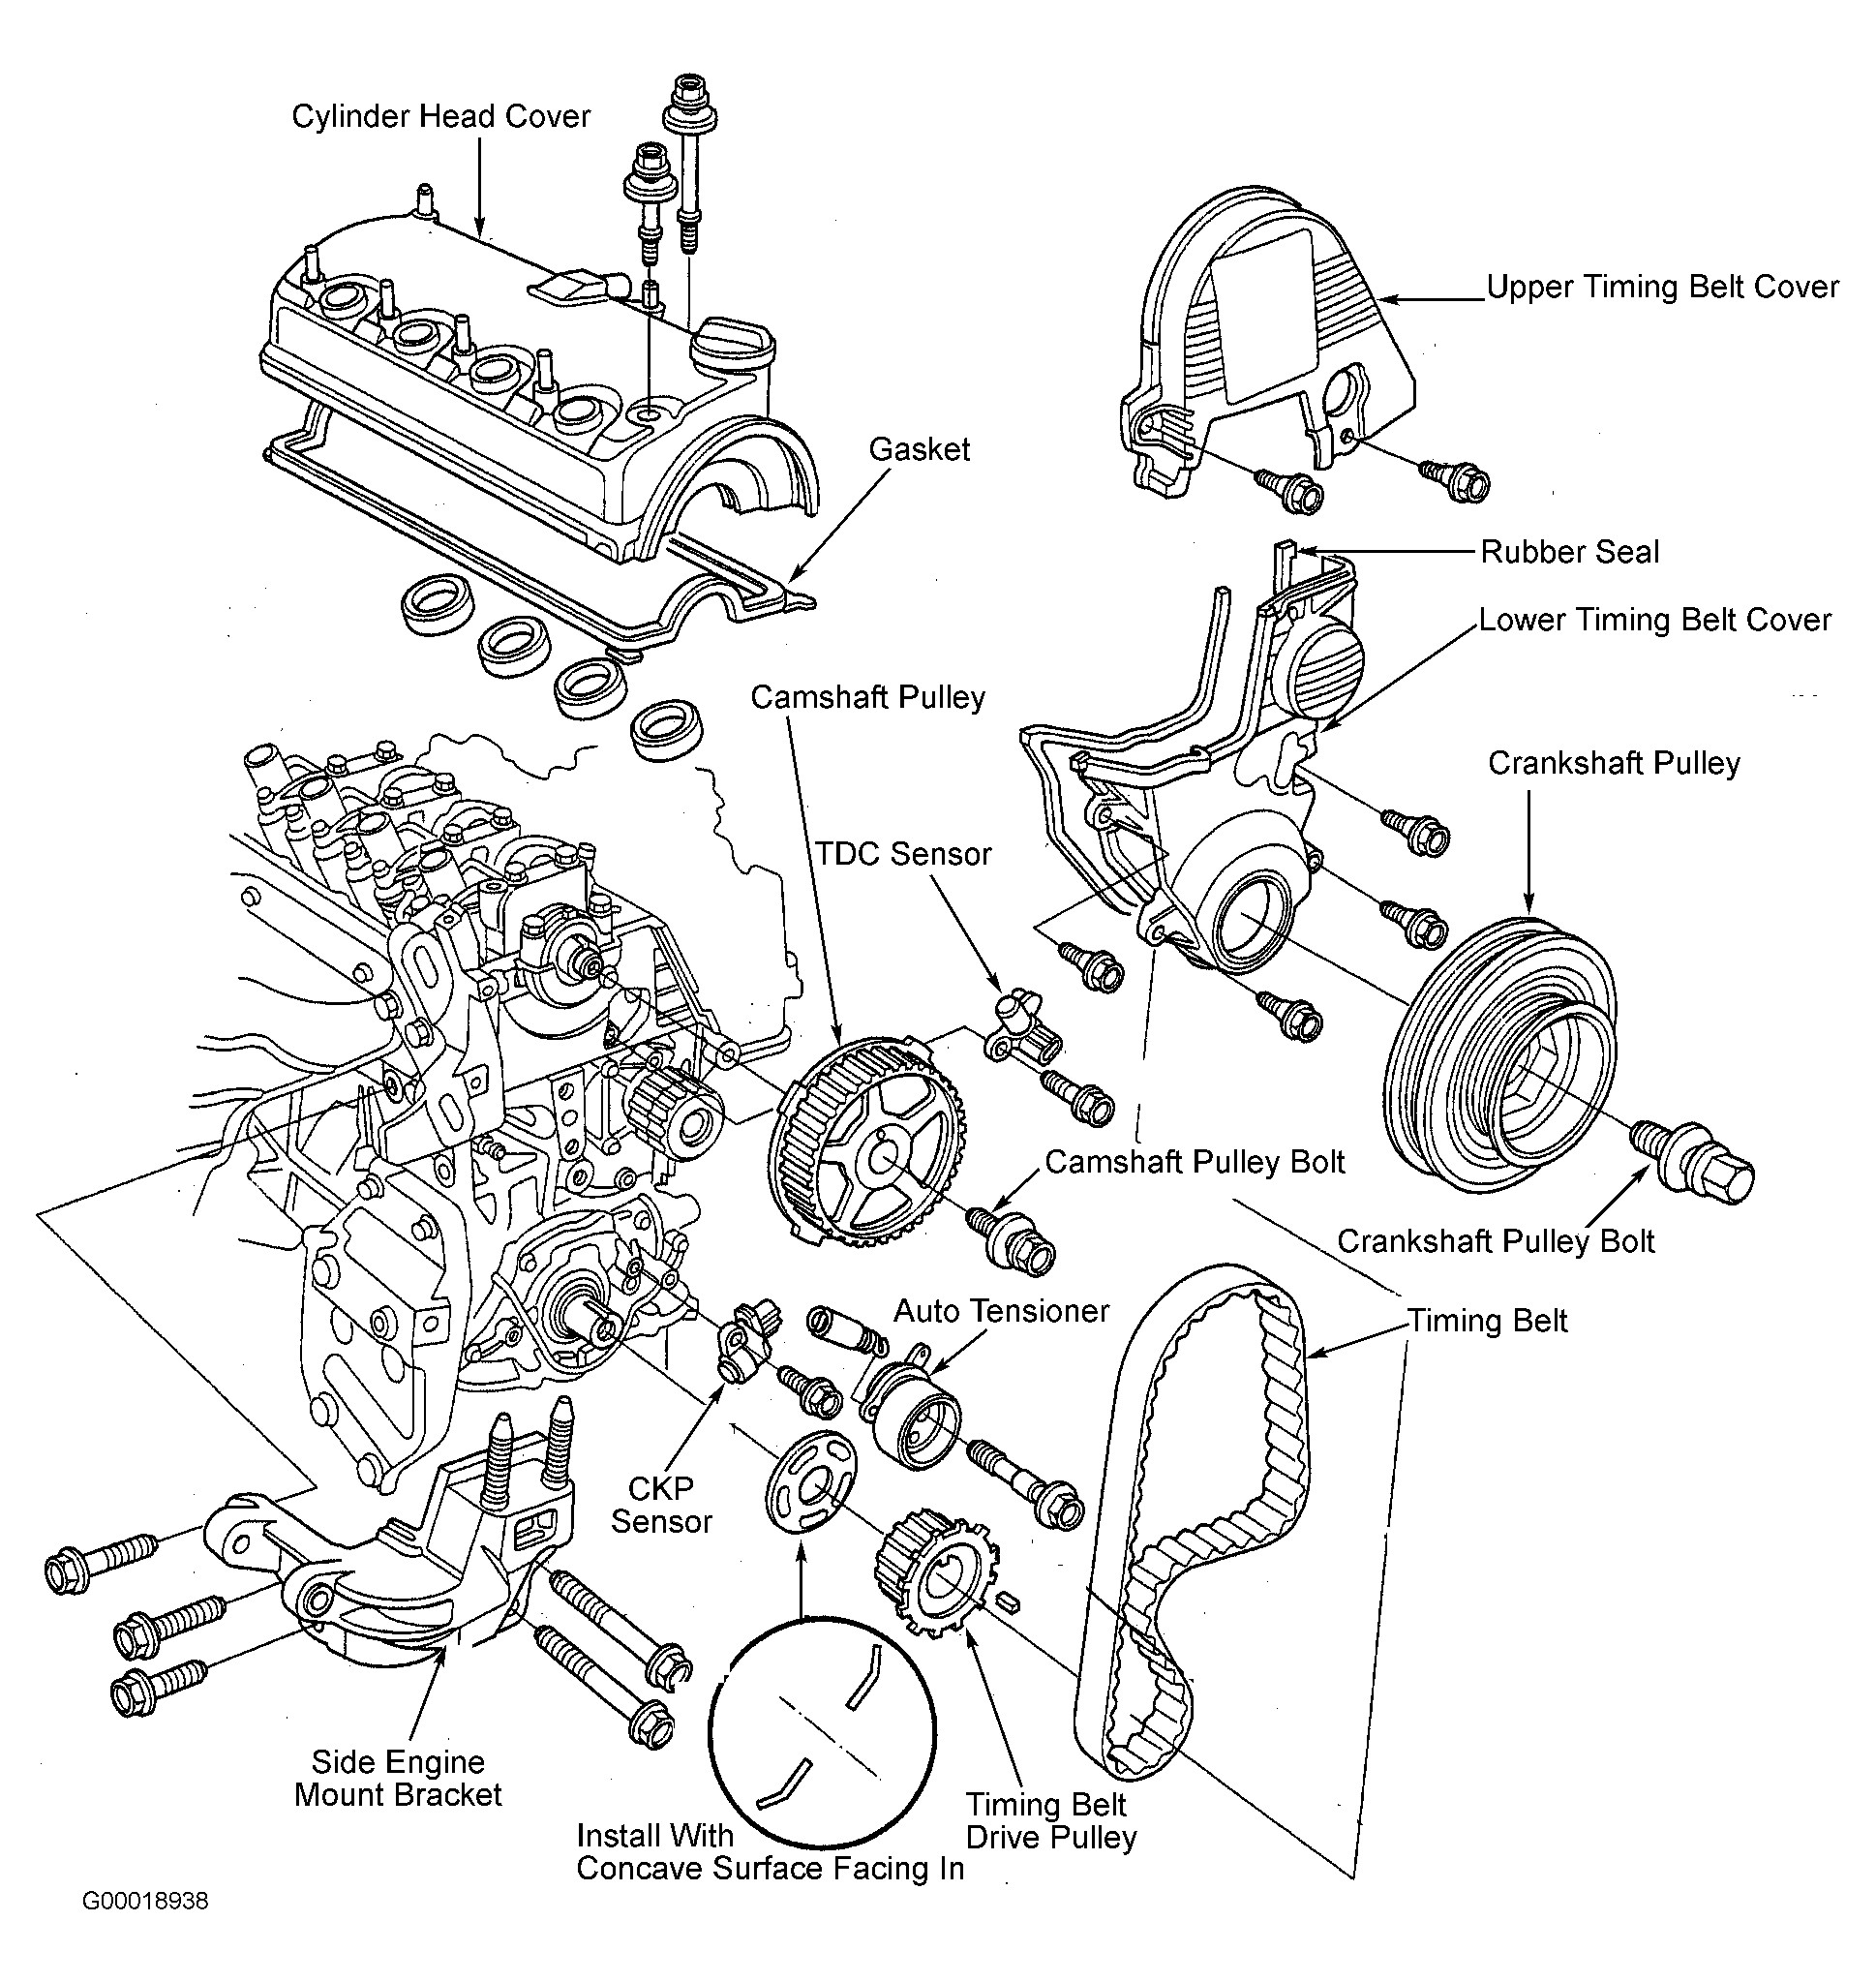 Honda Engine Parts Diagram Honda Civic Parts Diagram Wonderful Likeness Serpentine and Timing